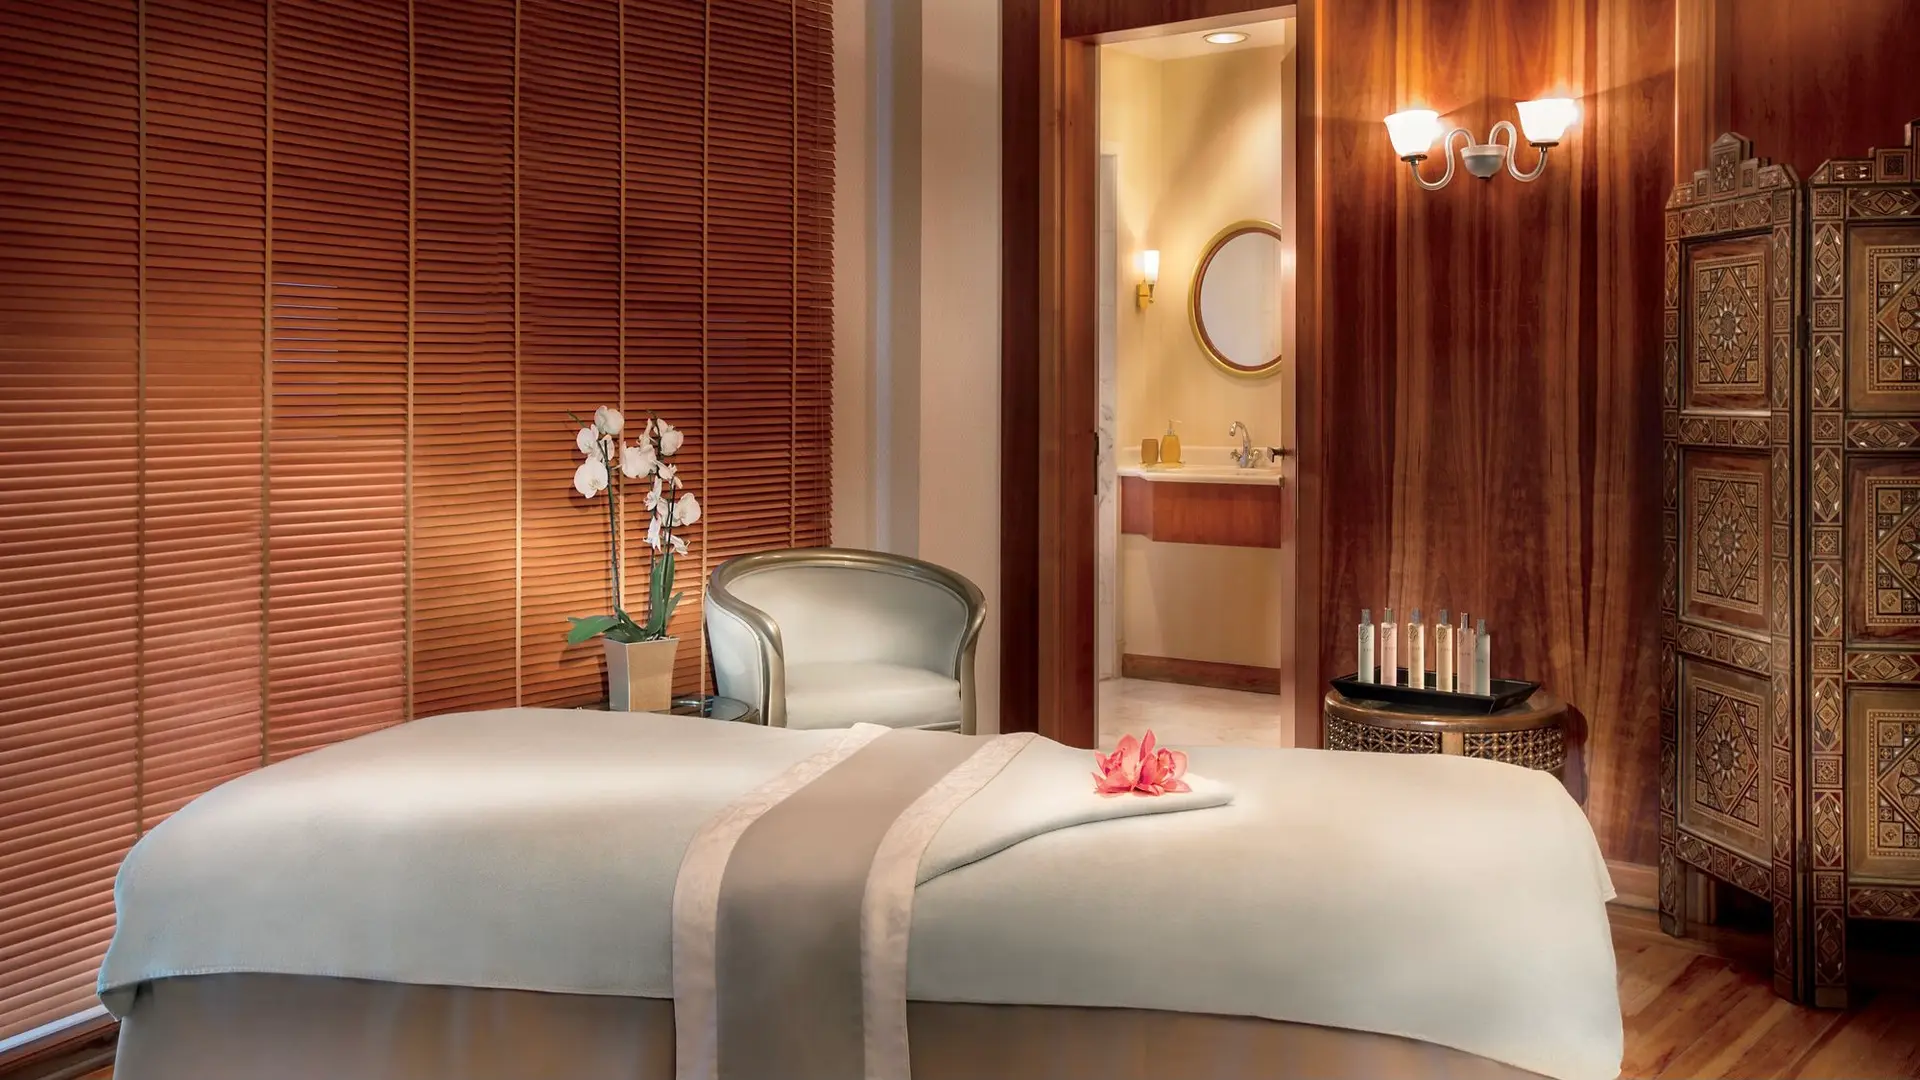 Hotel review Service & Facilities' - The Ritz-Carlton, Bahrain - 3